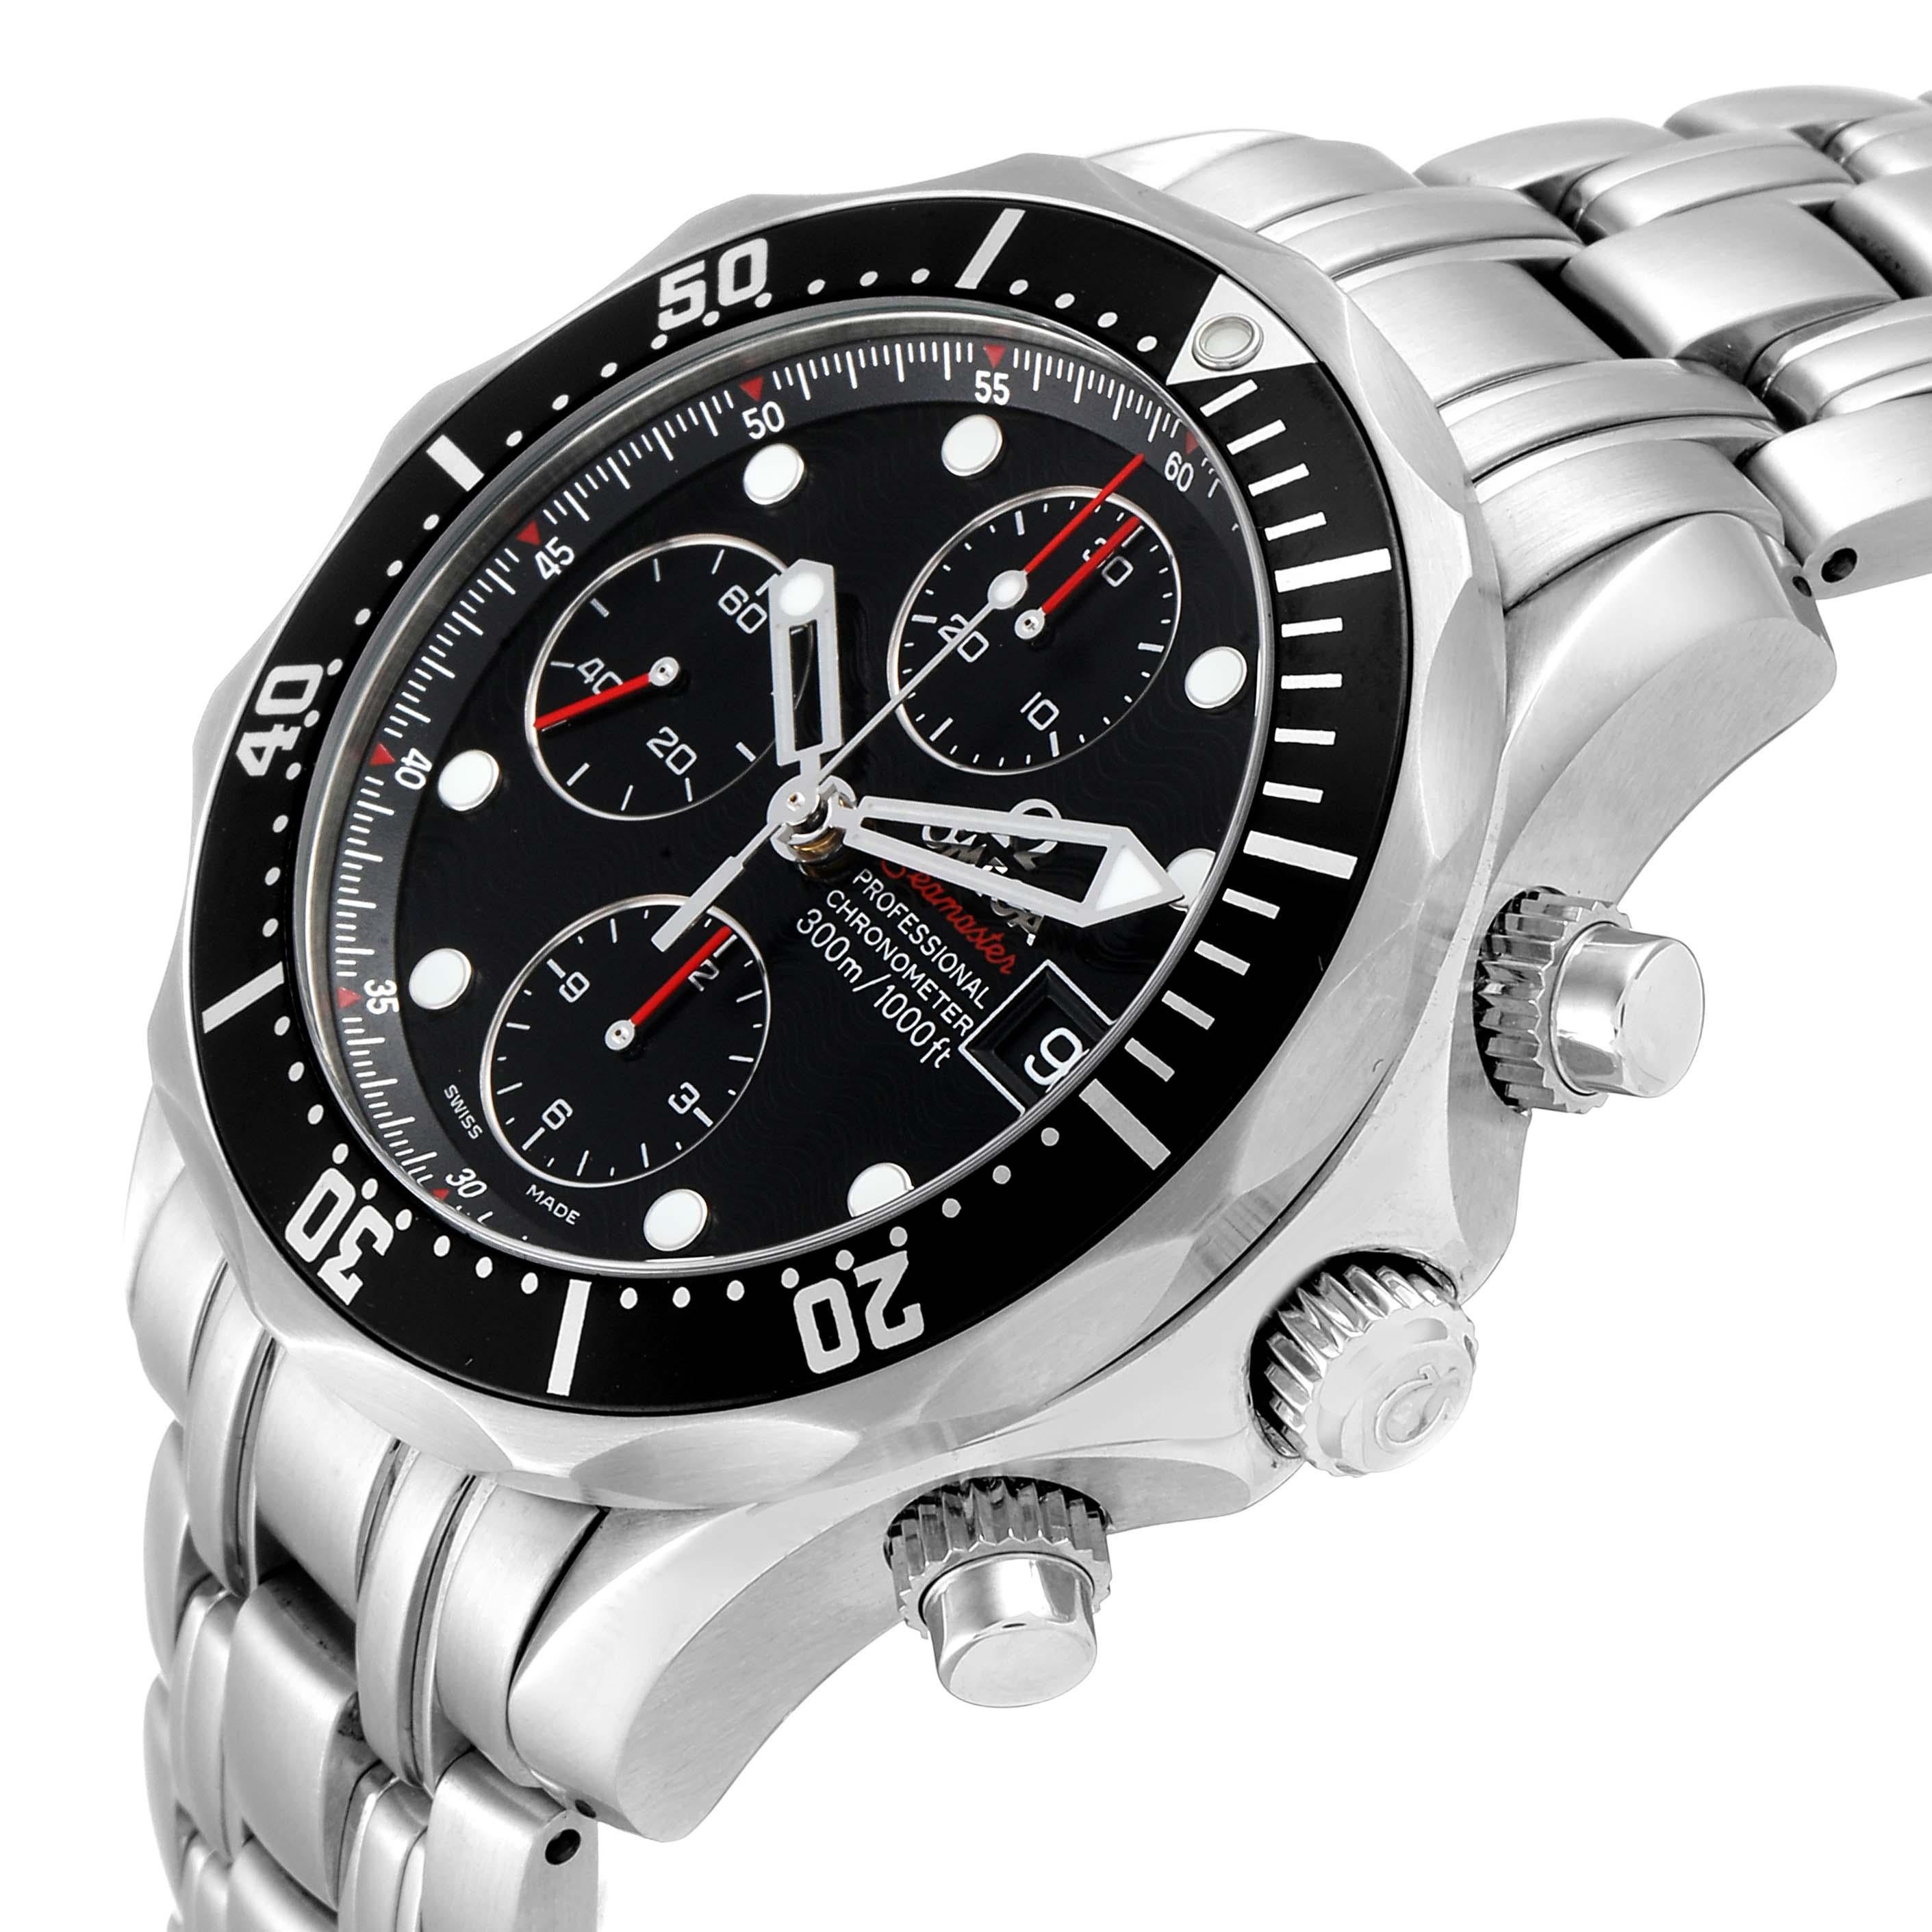 Omega Seamaster Chronograph Black Dial Watch 213.30.42.40.01.001 2